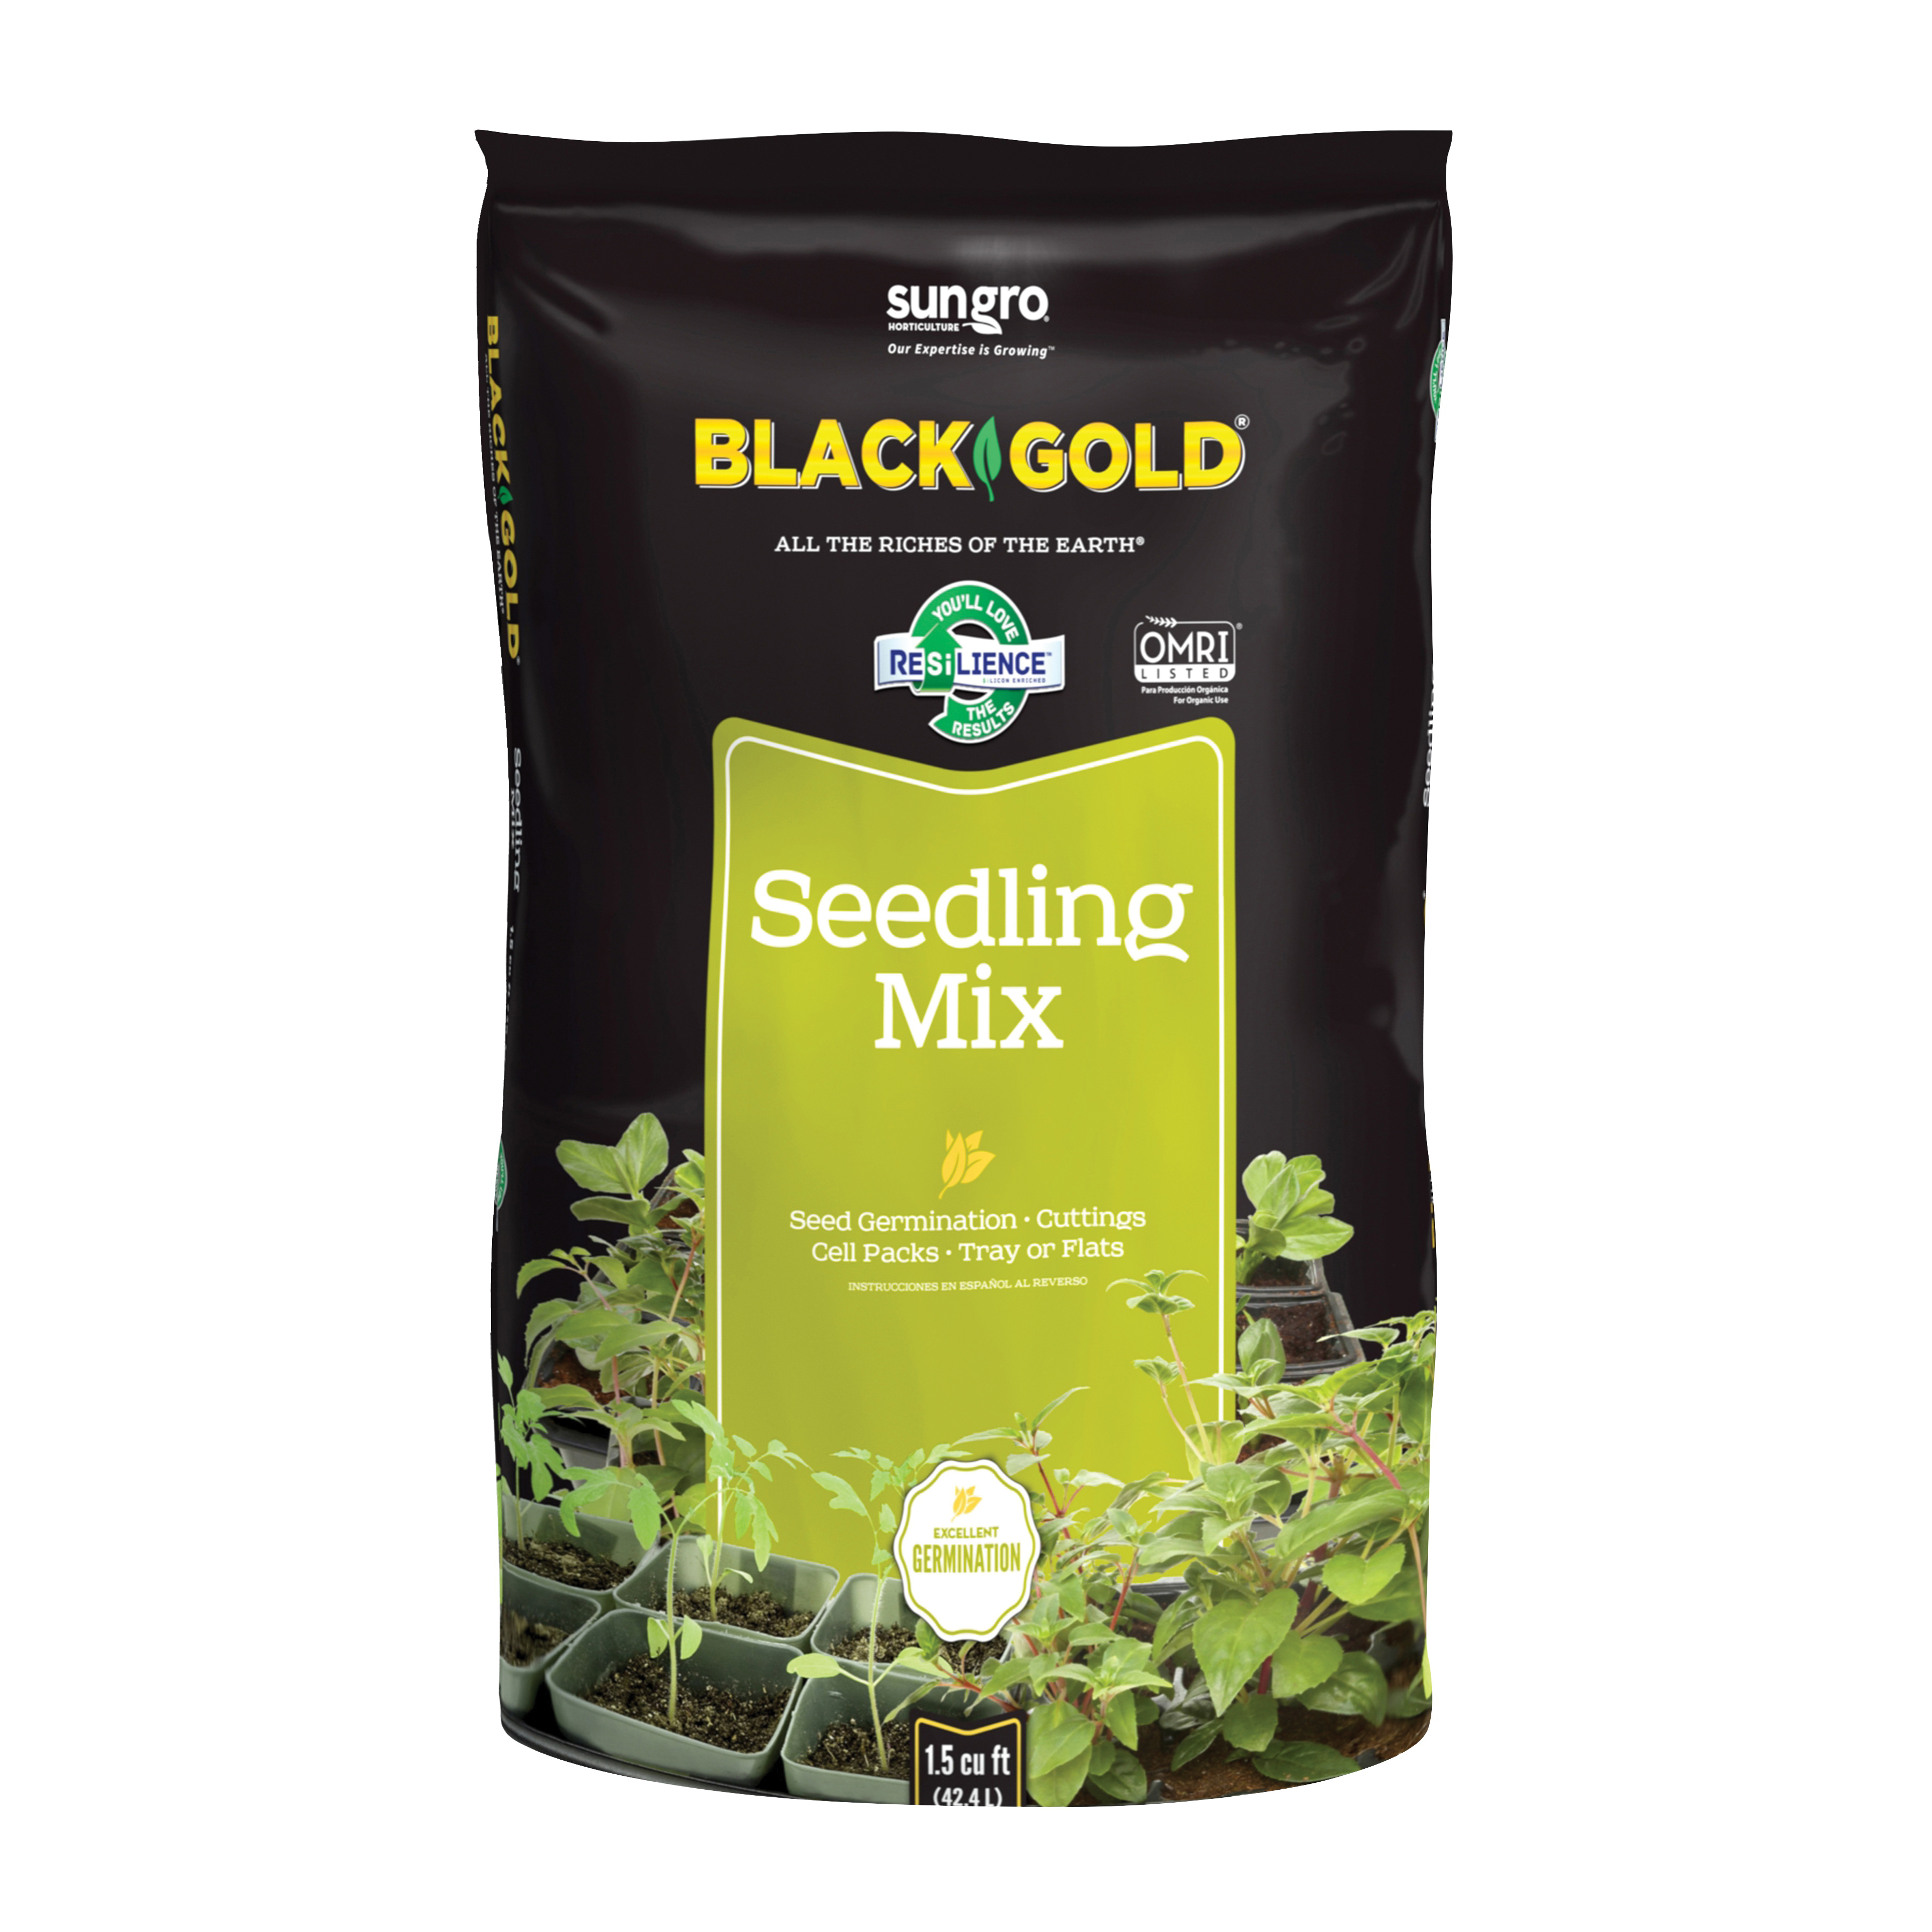 sun gro BLACK GOLD 1411002.CFL001.5P Seedling Mix, 1-1/2 cu-ft Bag - 1